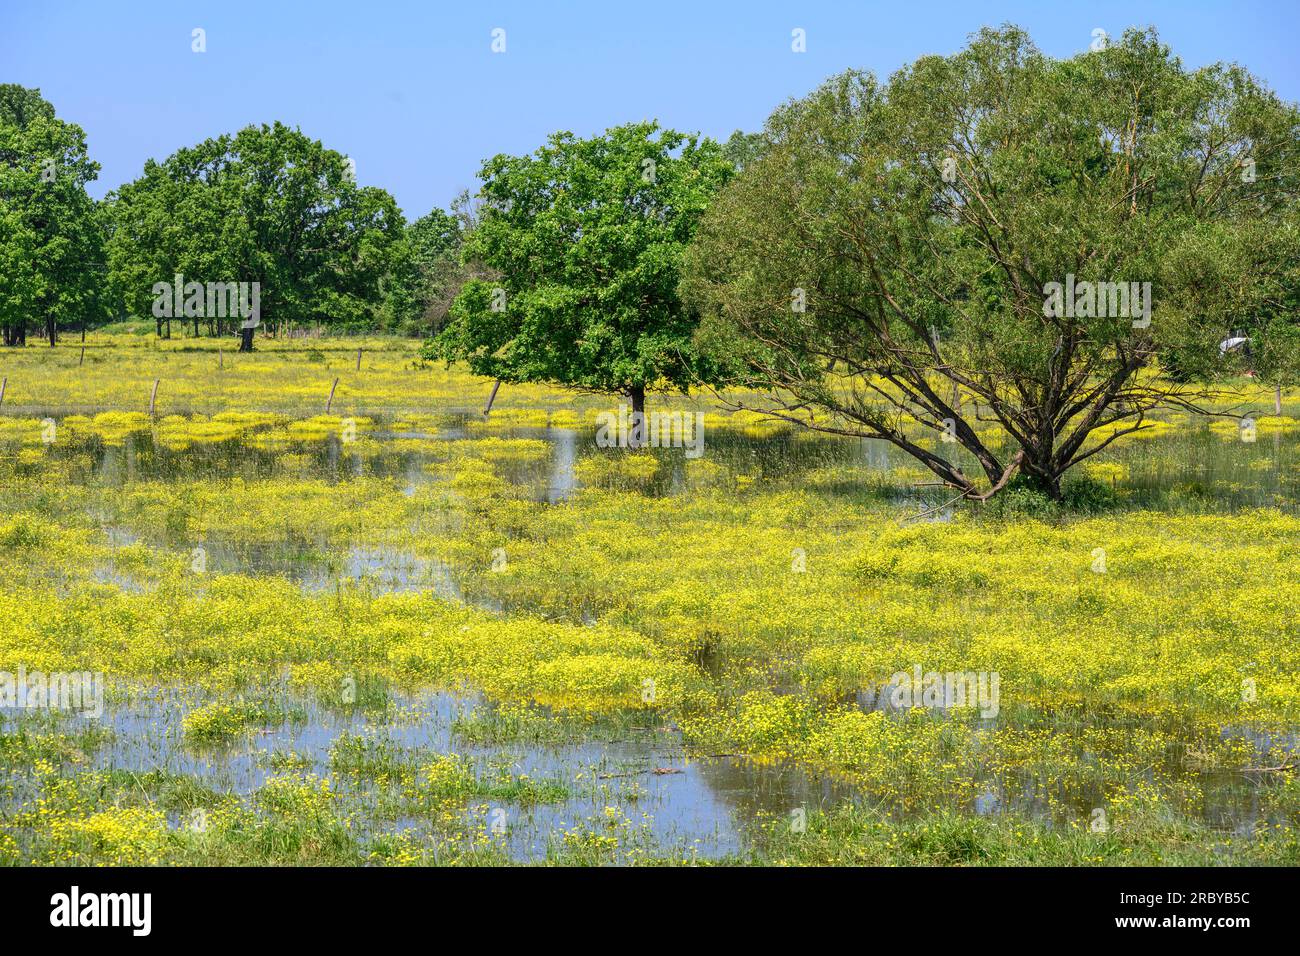 Überflutete Felder und Feuchtgebiete am Ufer der Sava bei Krapje im Naturpark Lonjsko Polje, Republik Kroatien. Stockfoto